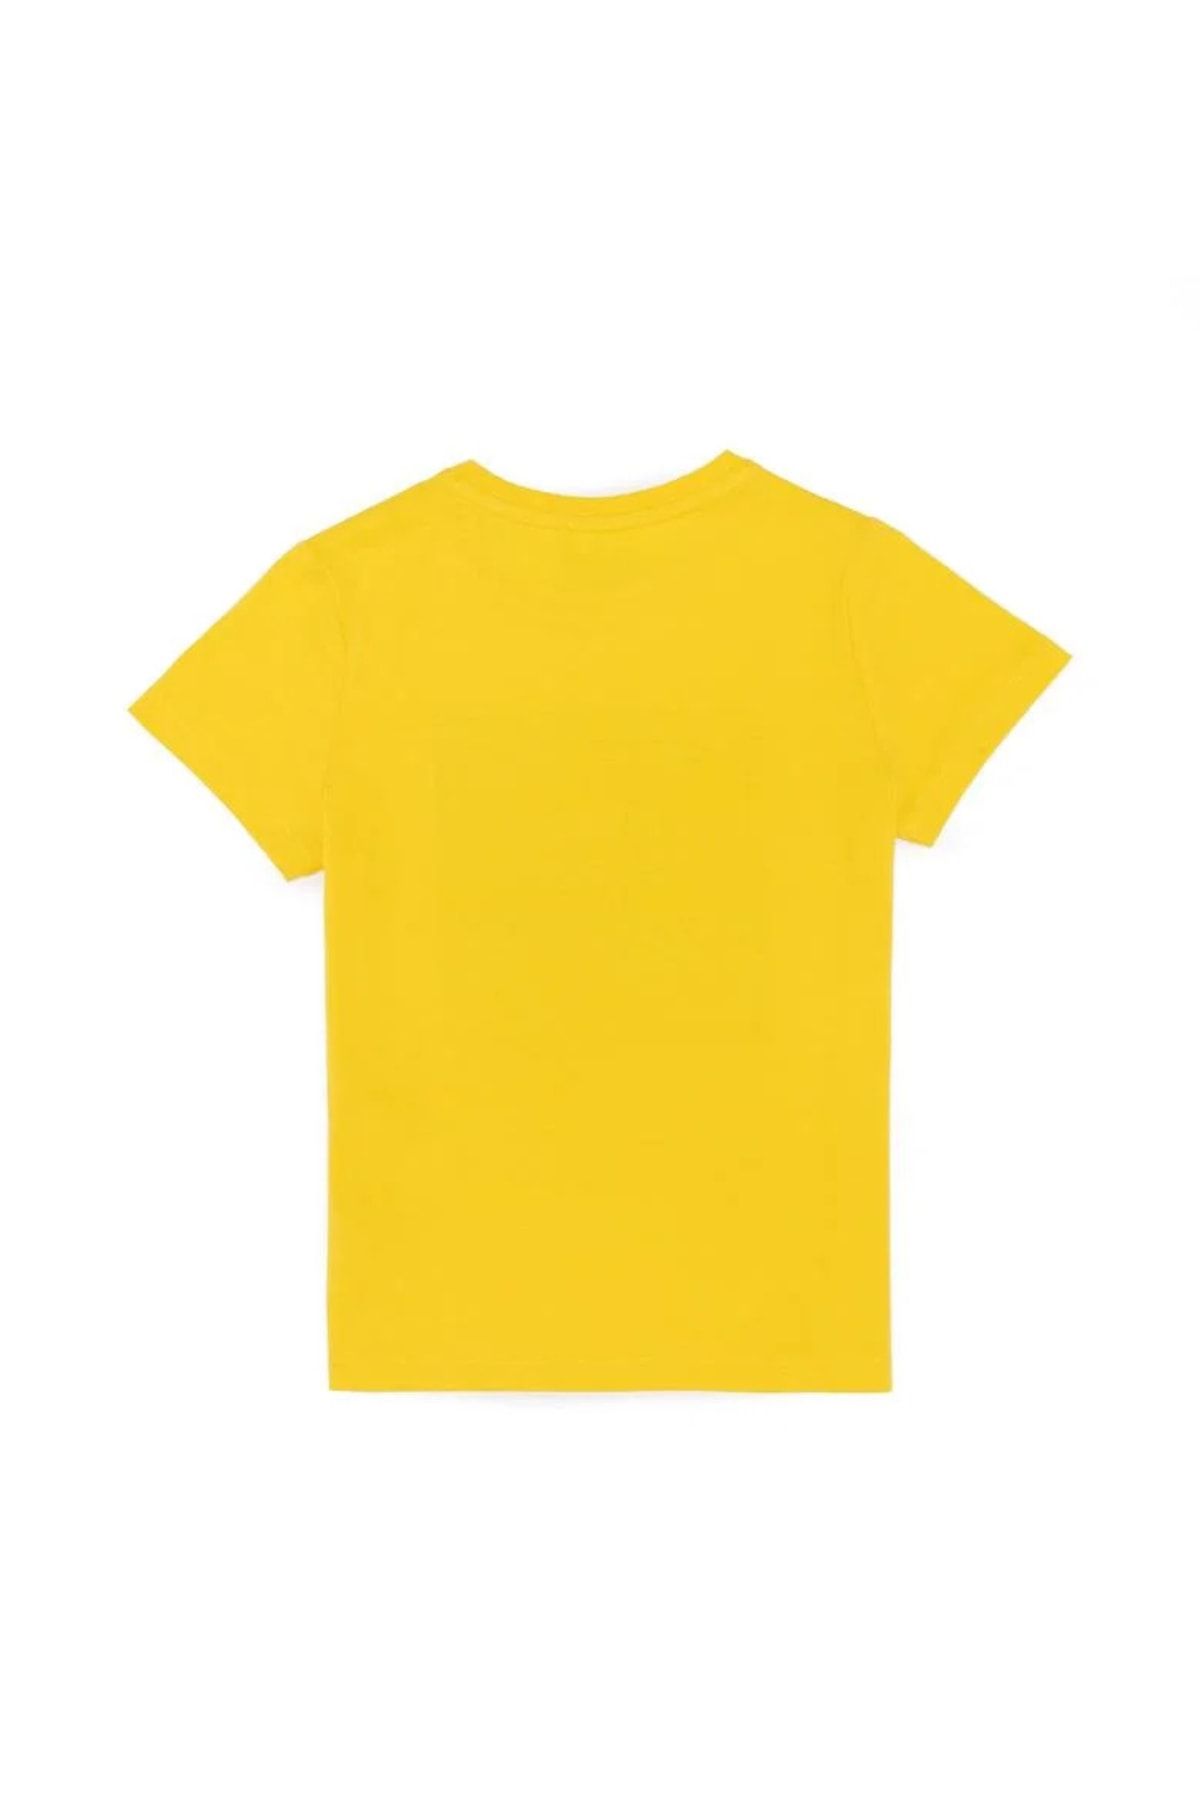 U.S. Polo Assn. تی شرت پسرانه زرد تیره